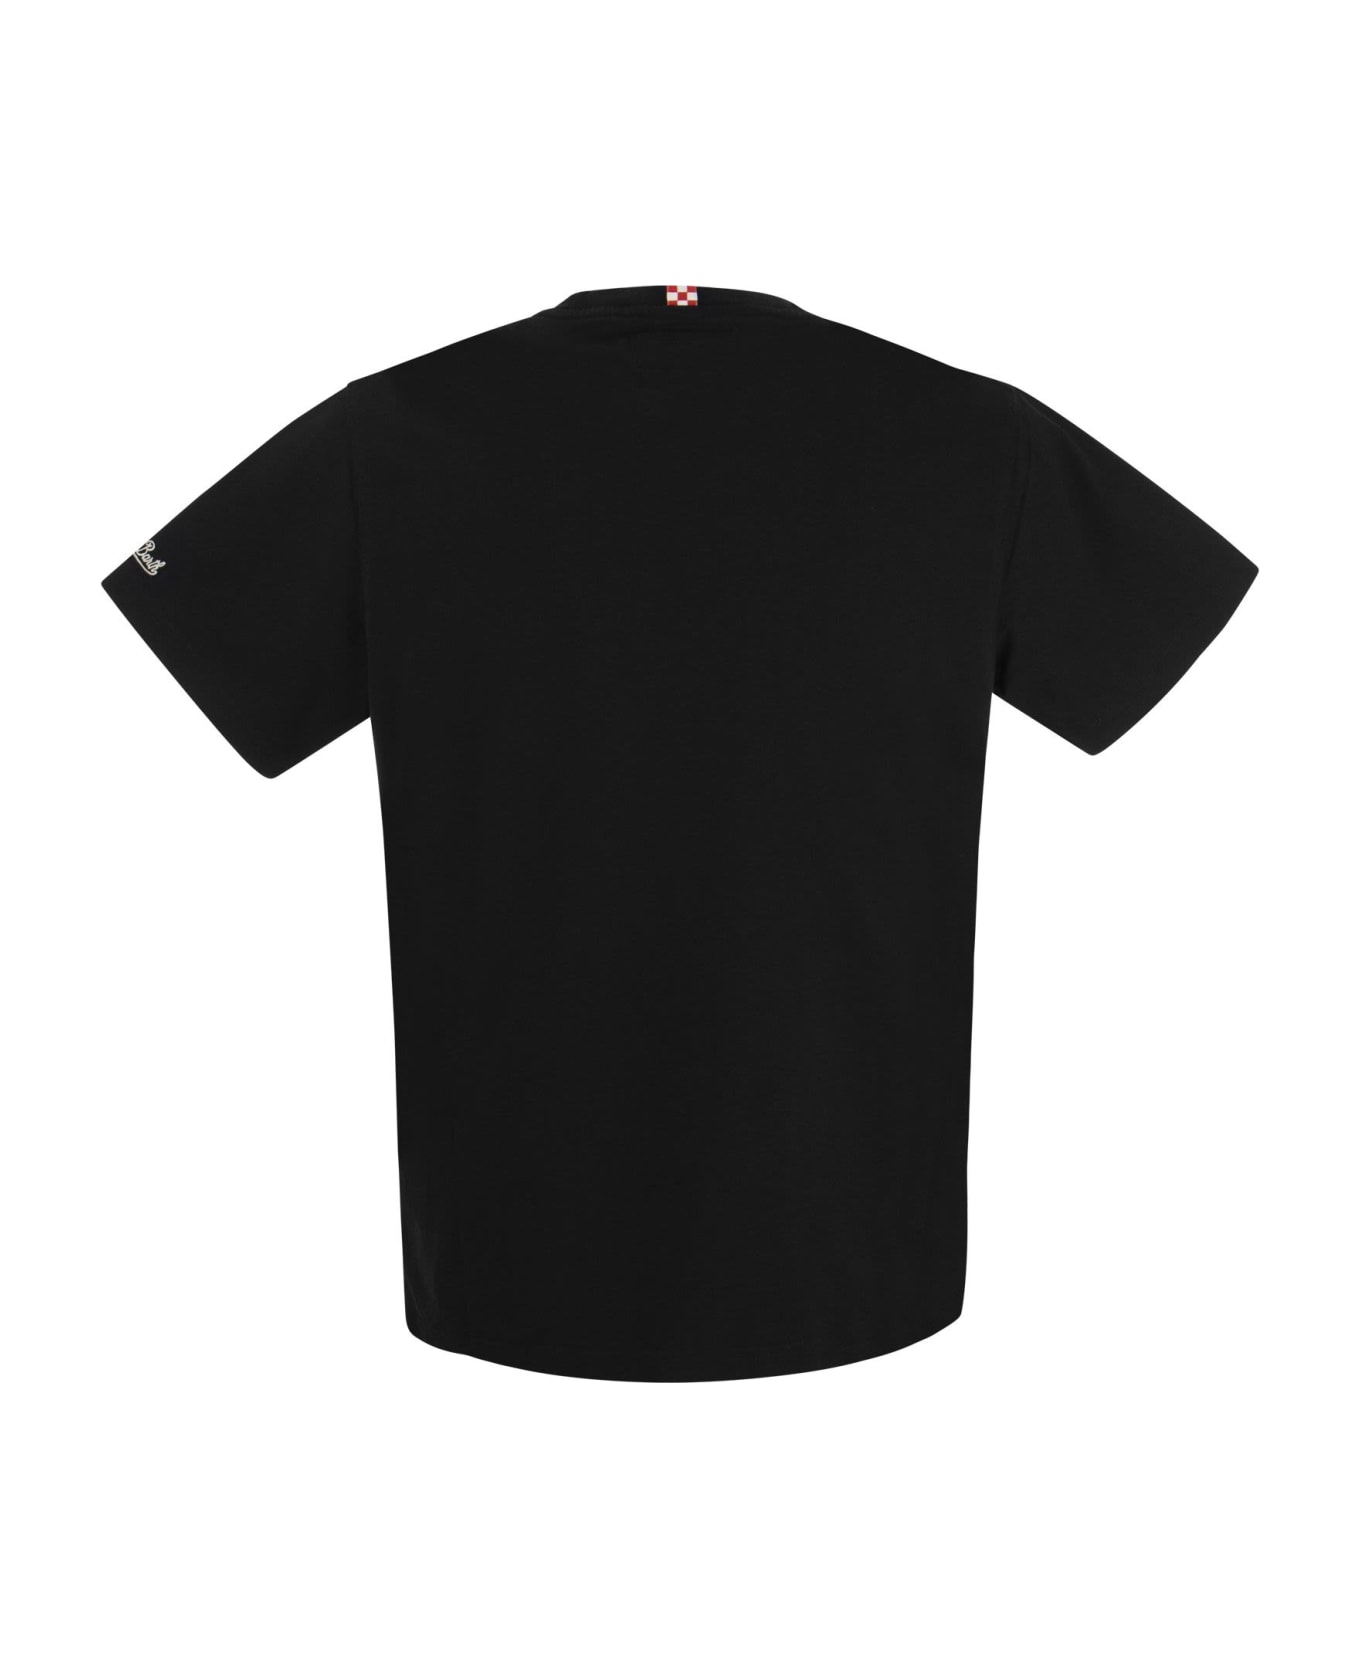 MC2 Saint Barth Cotton T-shirt With Not Today Print - Black